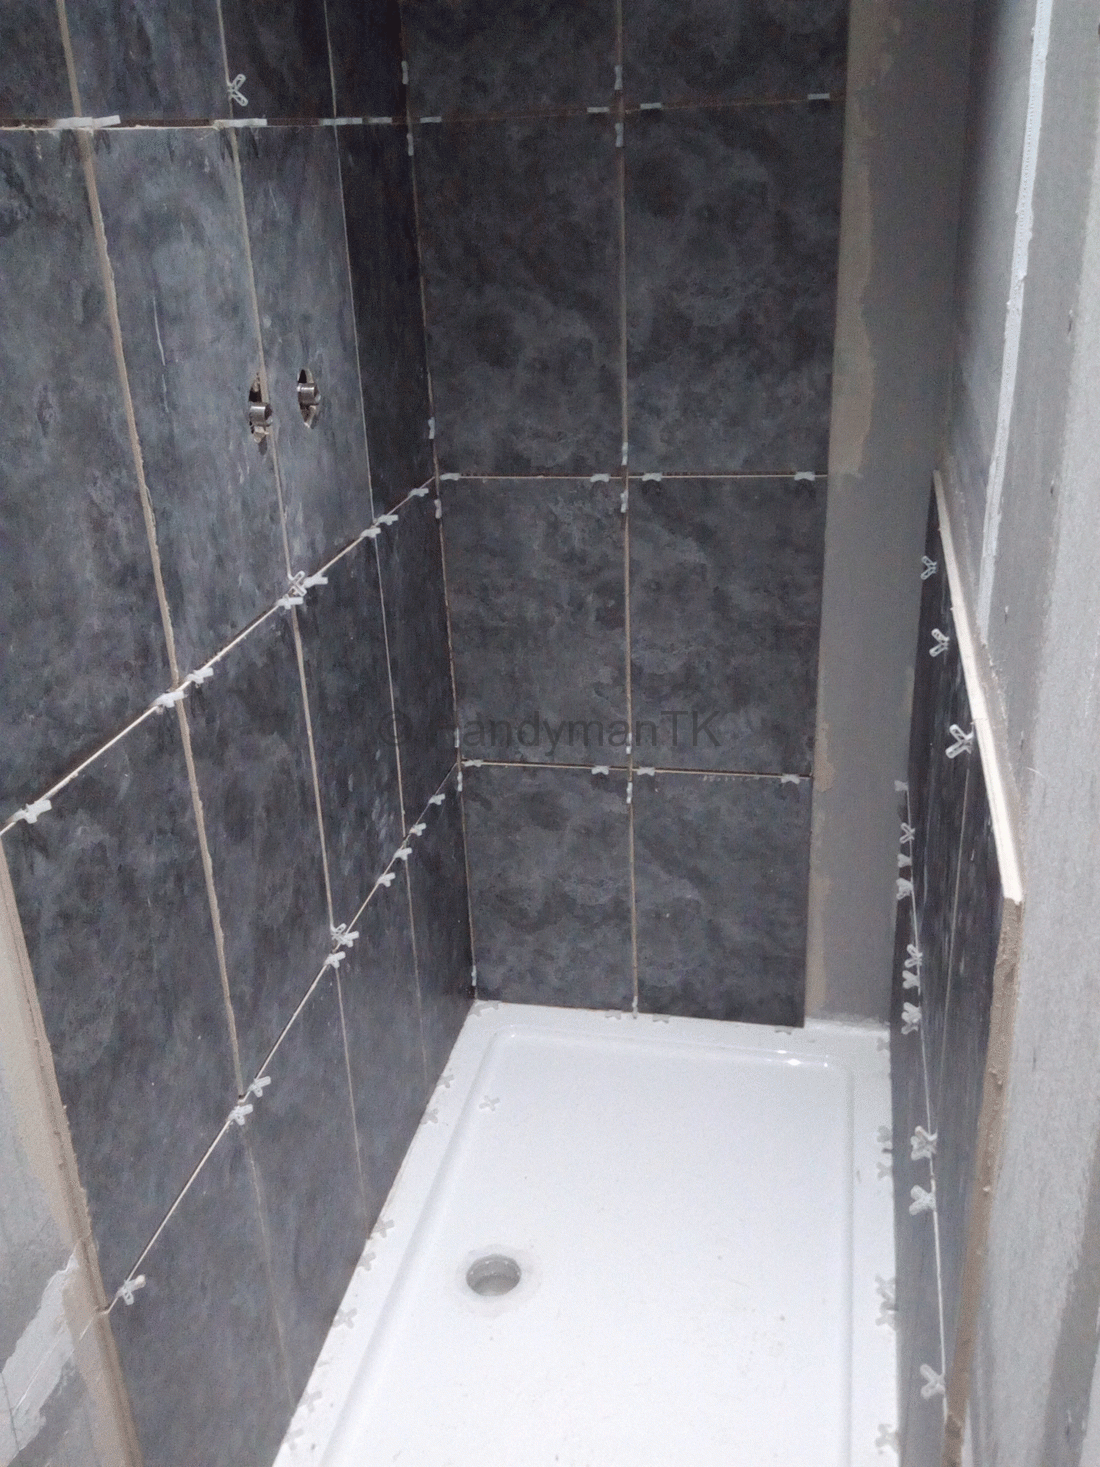 Handyman tiling shower room wall and floor